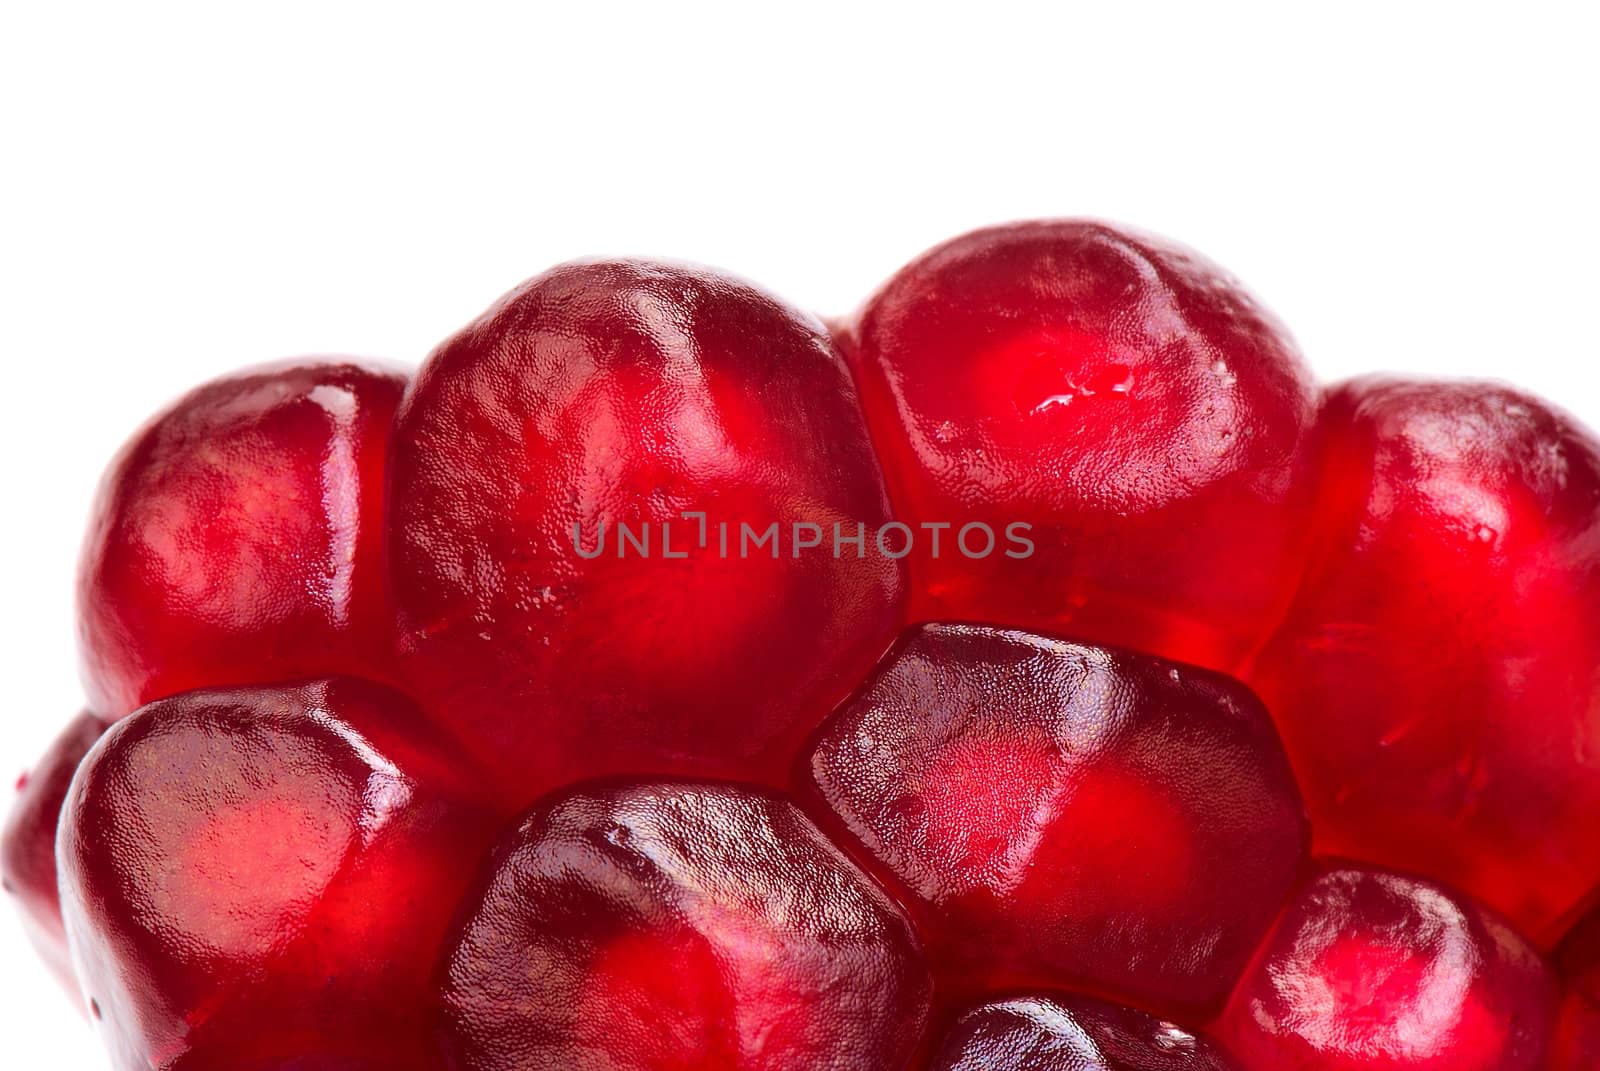 Pomegranate seeds by Kamensky